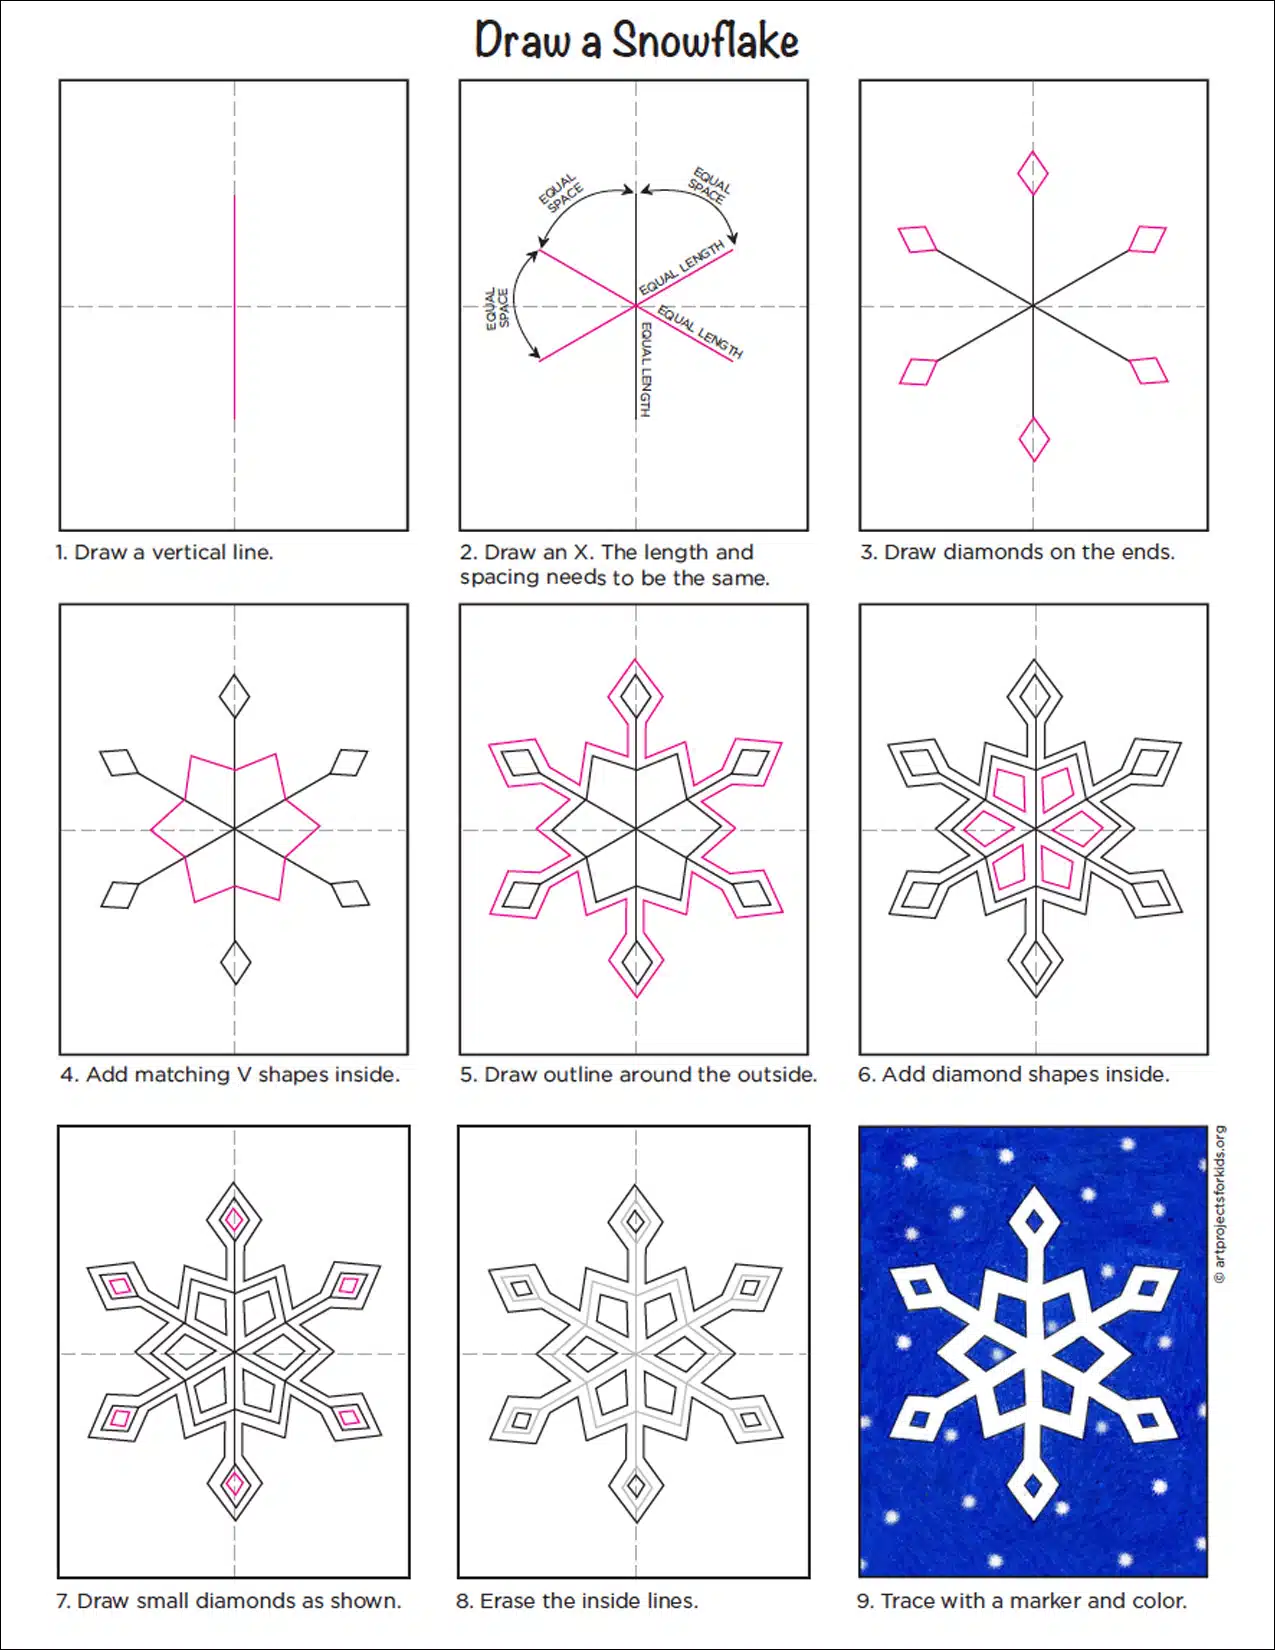 Draw a Snowflake diagram web.jpg